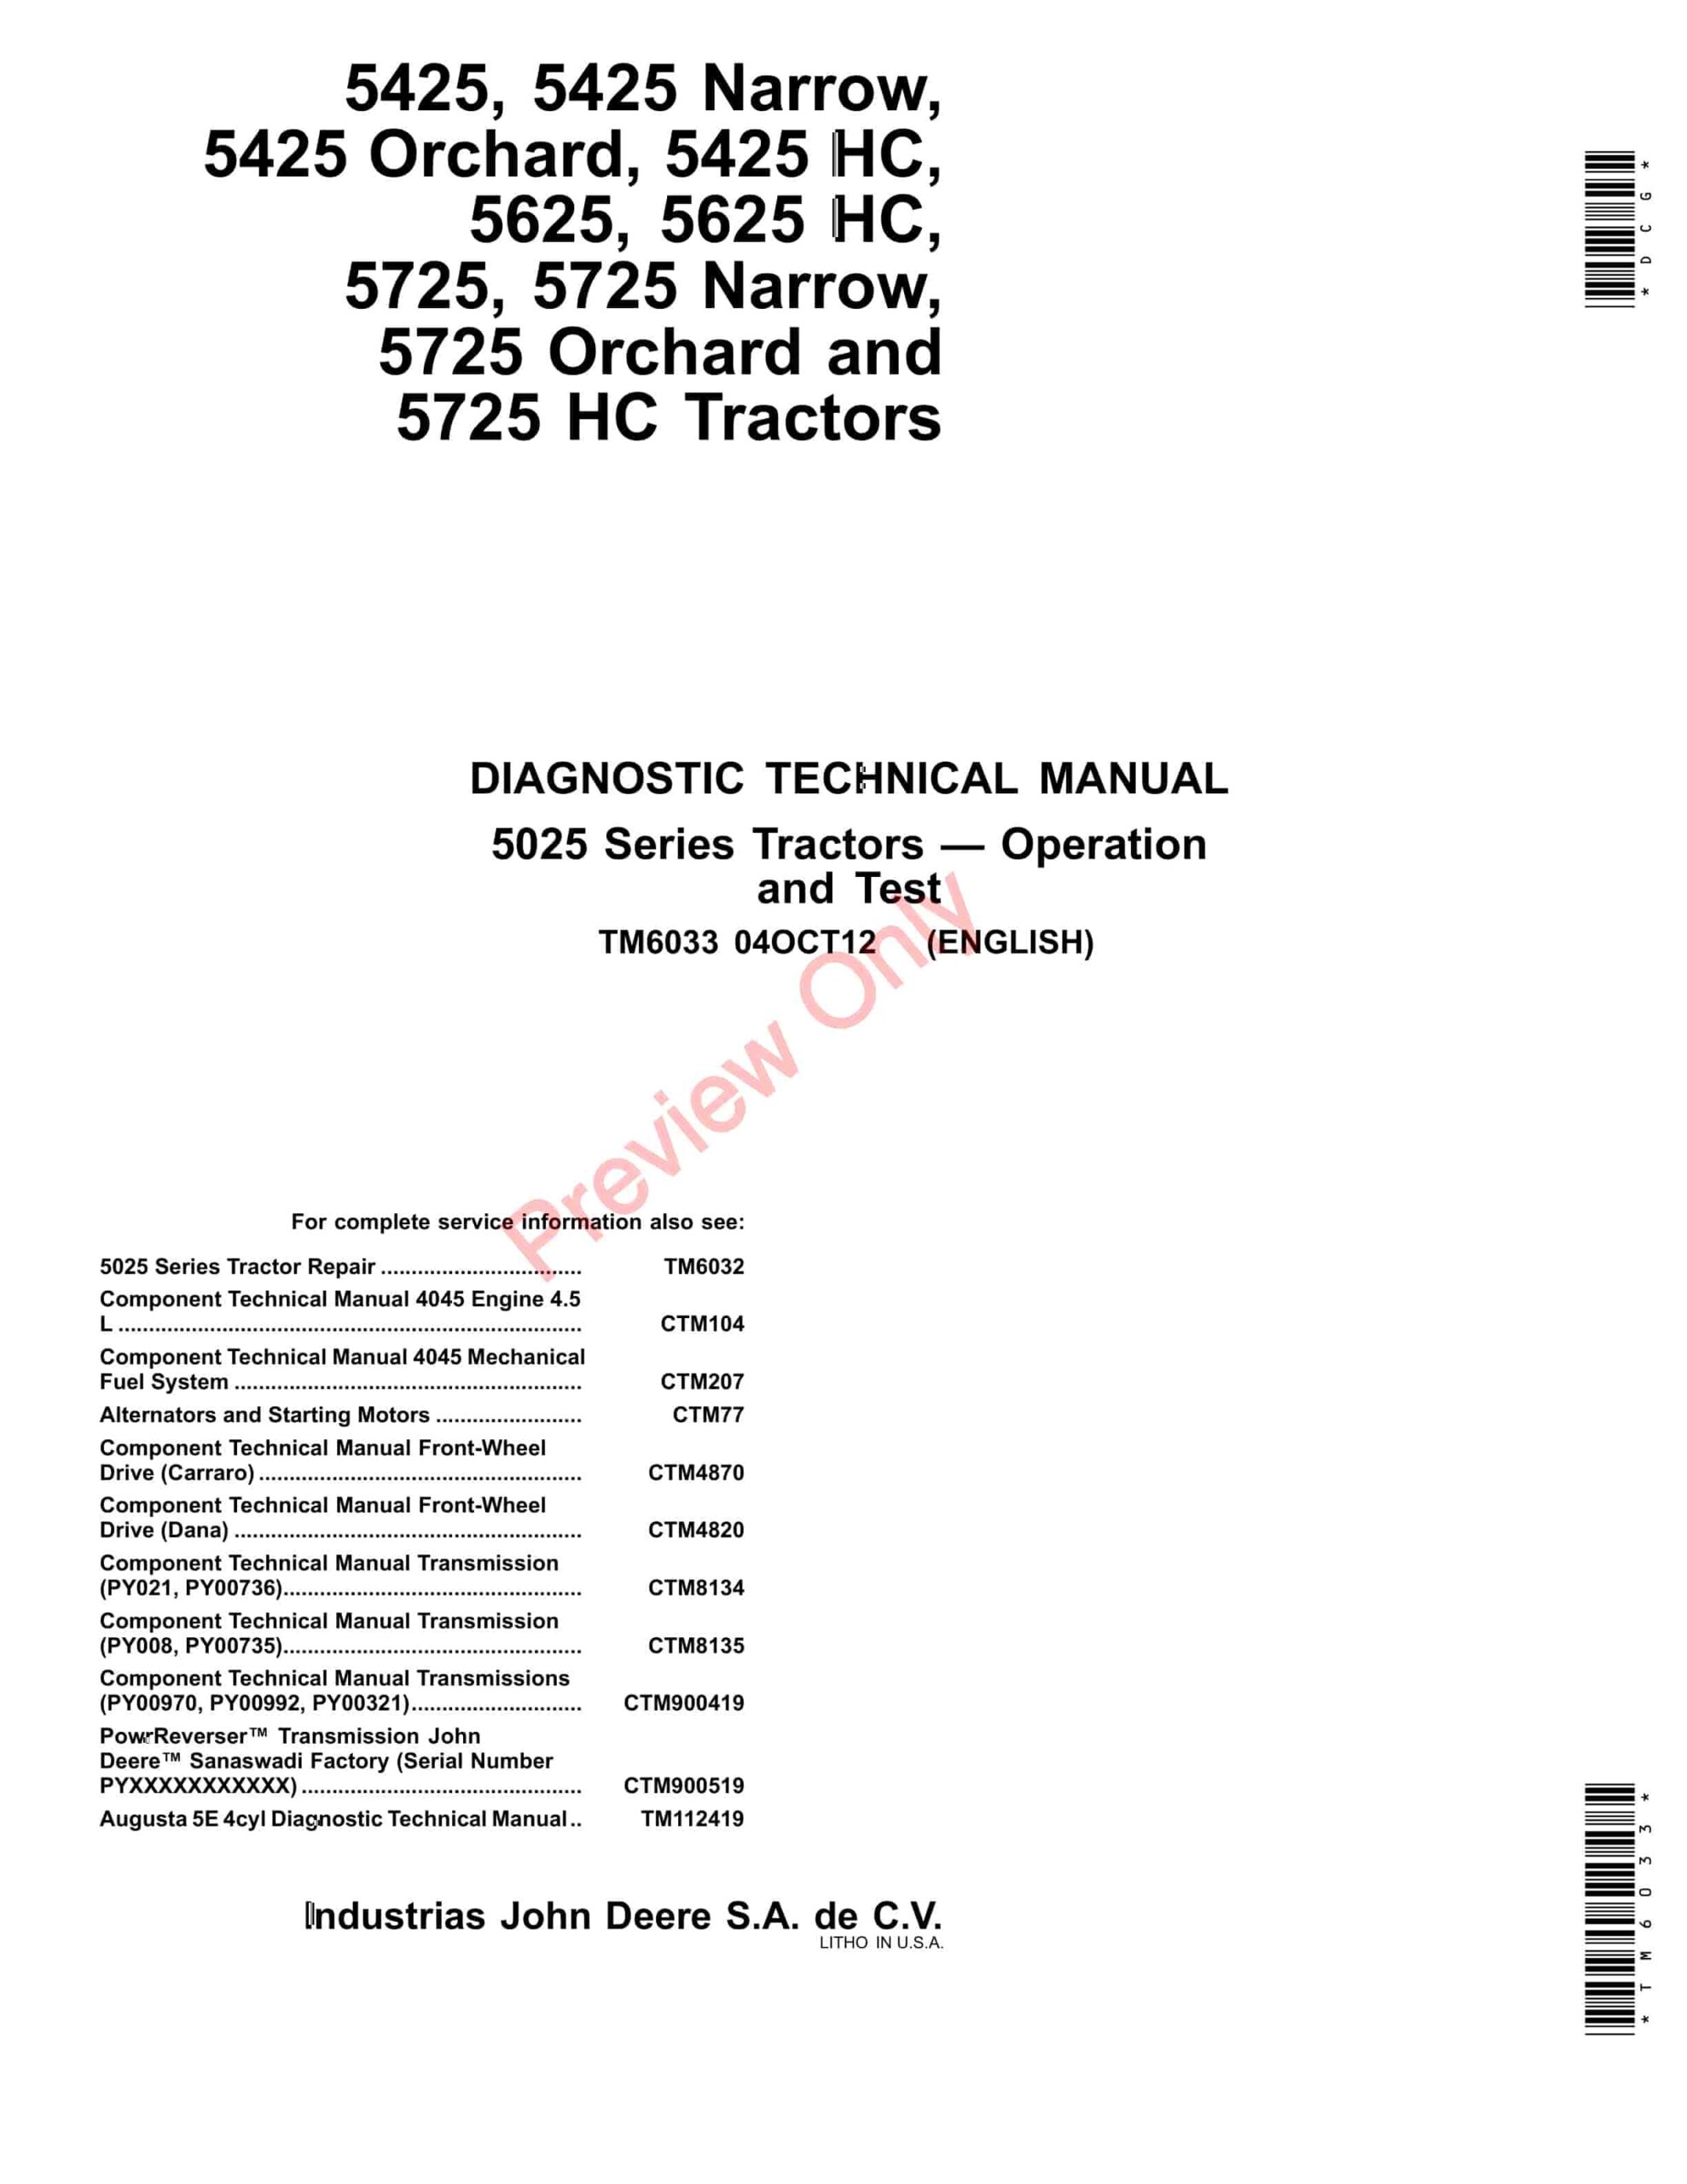 John Deere 5425, 5625, 5725 Narrow, Orchard and HC Tractors Technical Manual TM6033 04OCT12-1